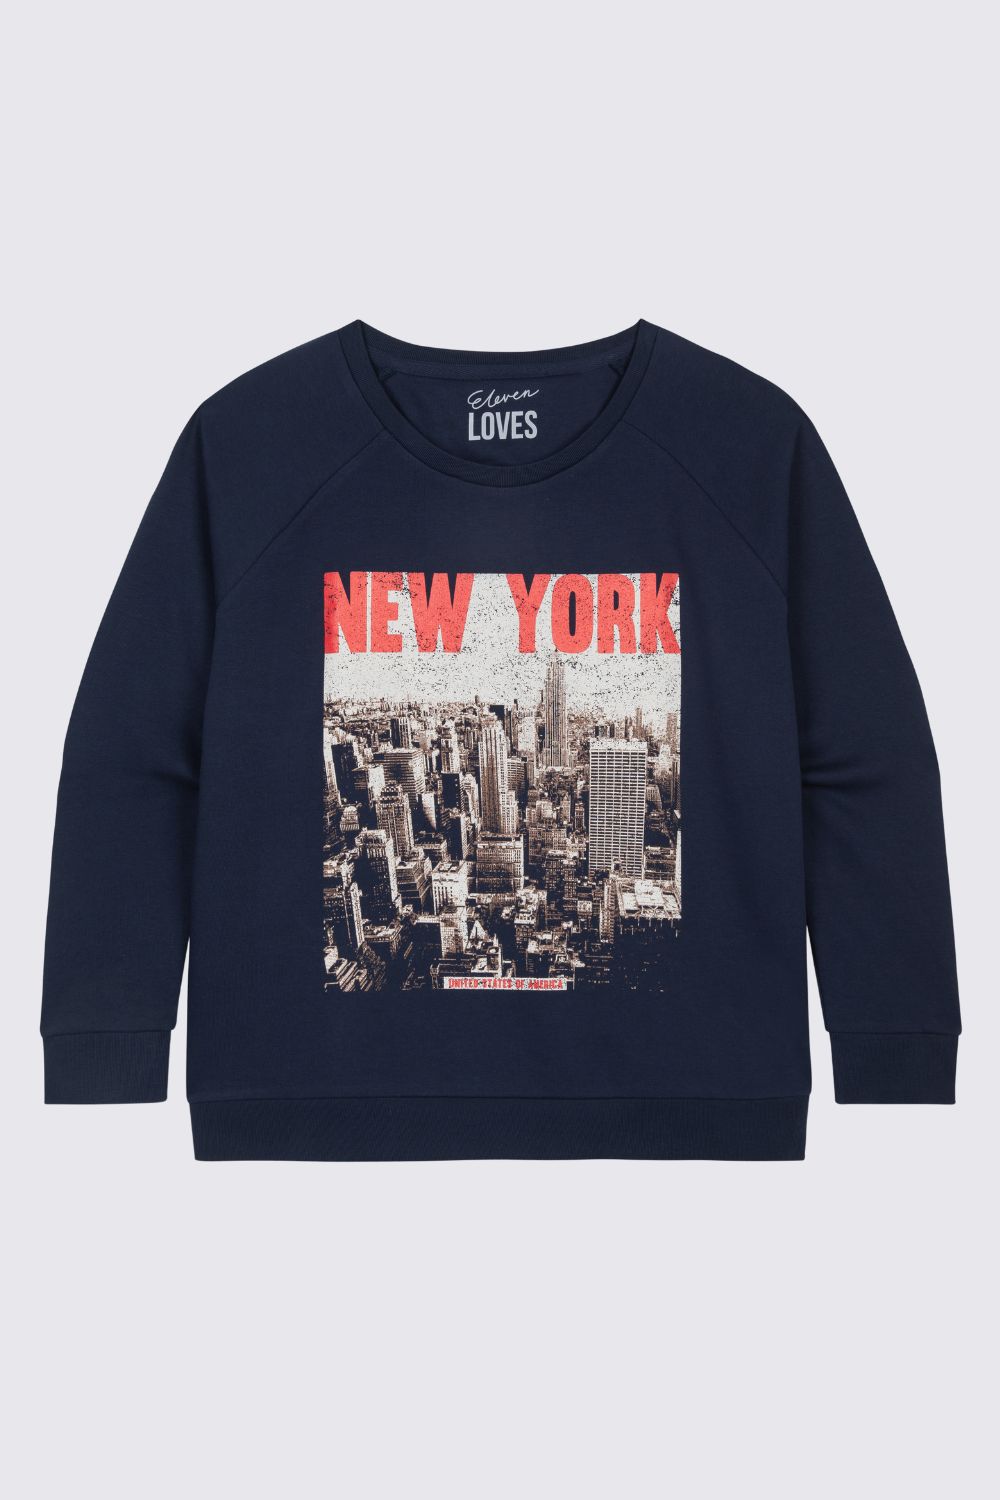 New York sweatshirt navy sweatshirt city sweatshirt eleven loves ellen loves 11loves 